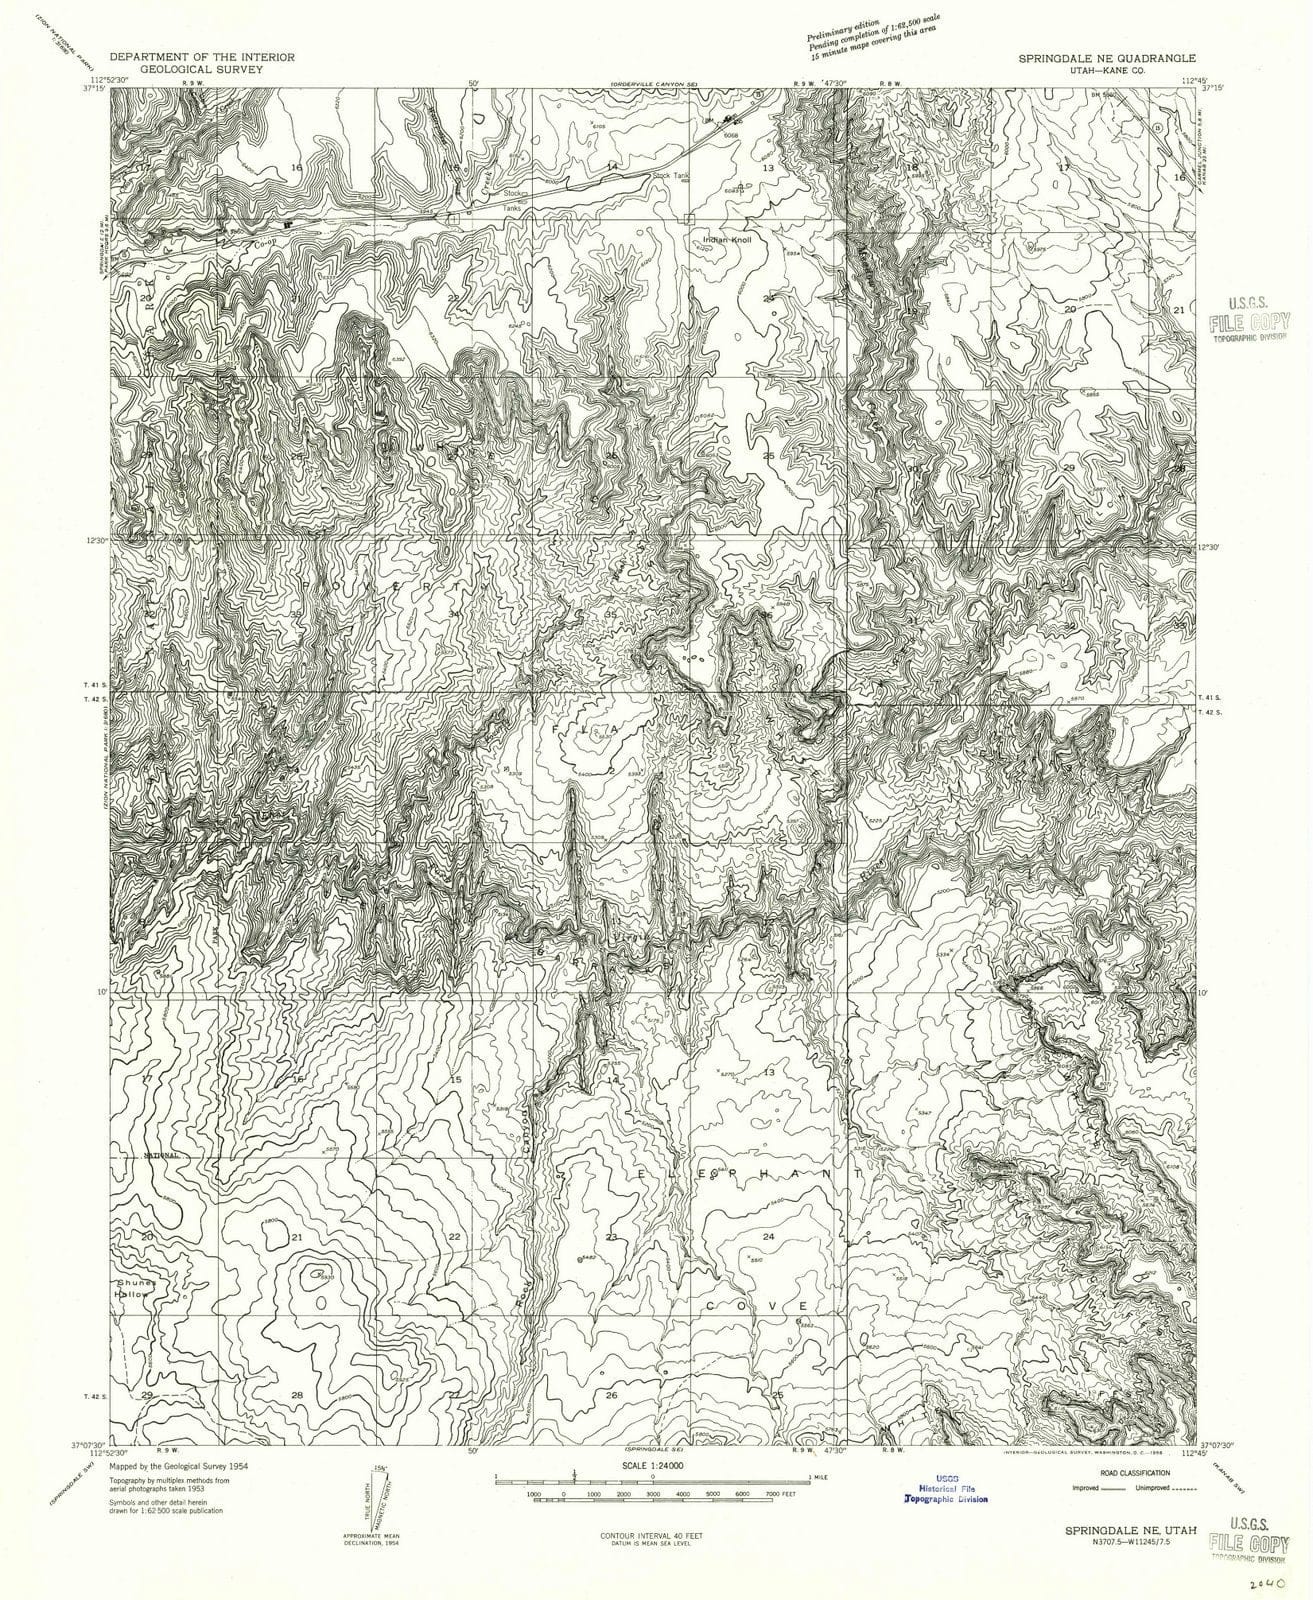 1956 Springdale, UT - Utah - USGS Topographic Map